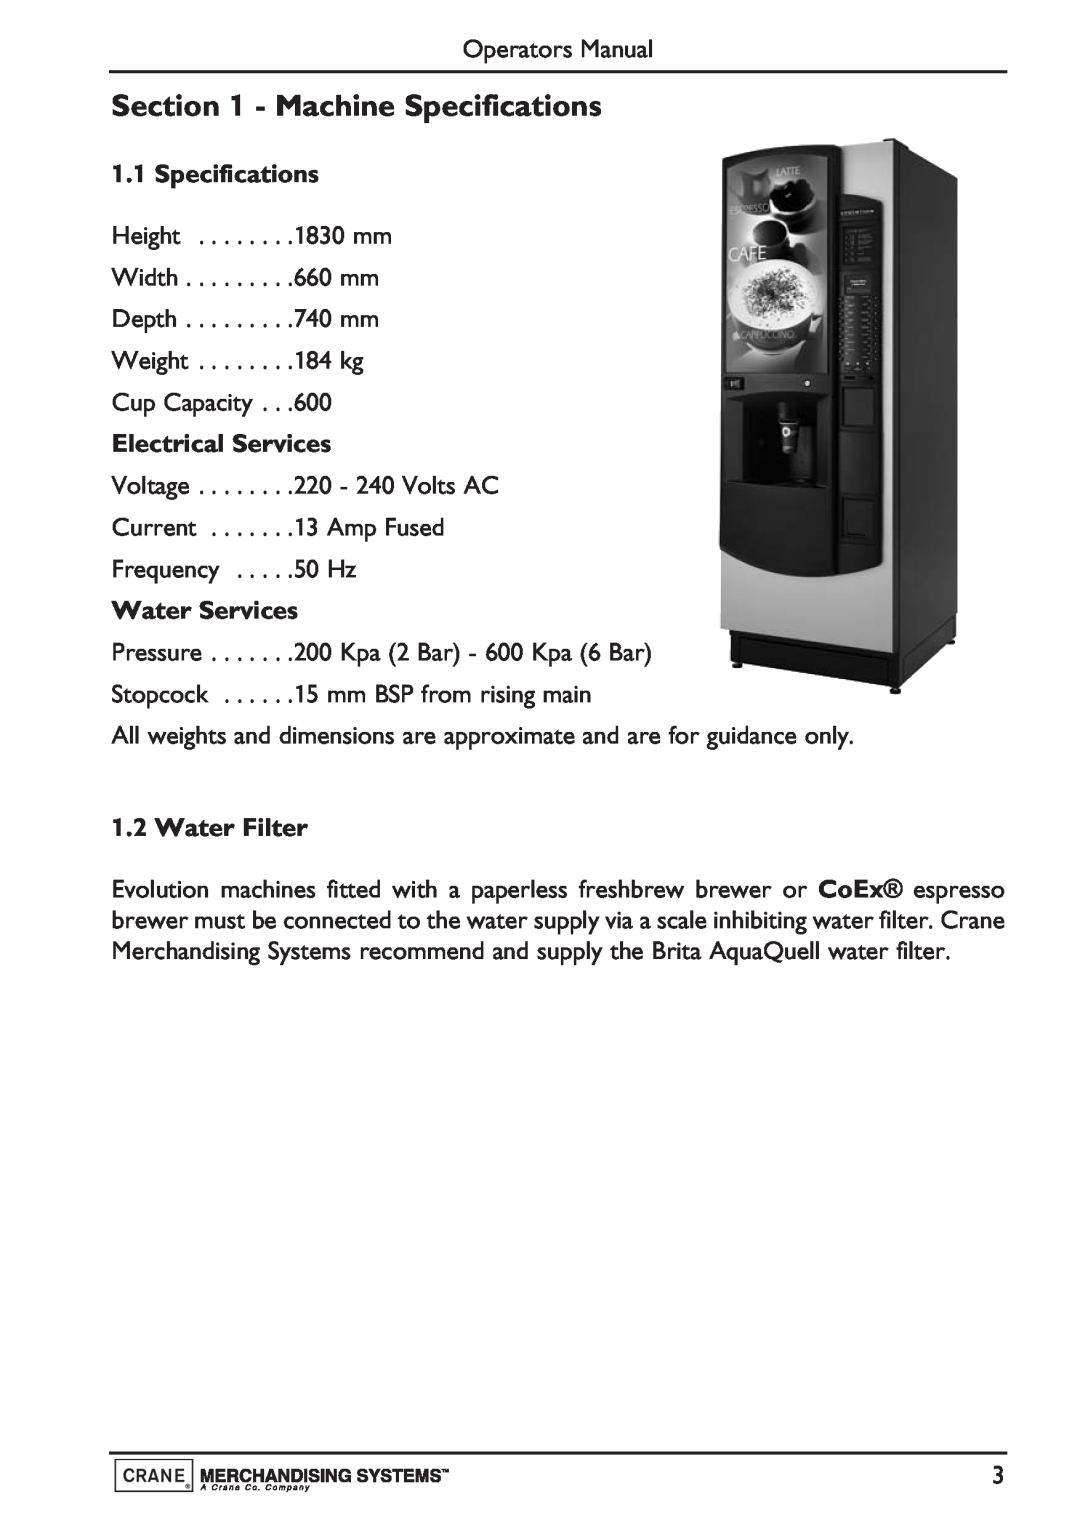 Evolution Technologies Instant, Freshbrew & Espresso (B2C) Machine, PR10908000 Machine Specifications, Electrical Services 